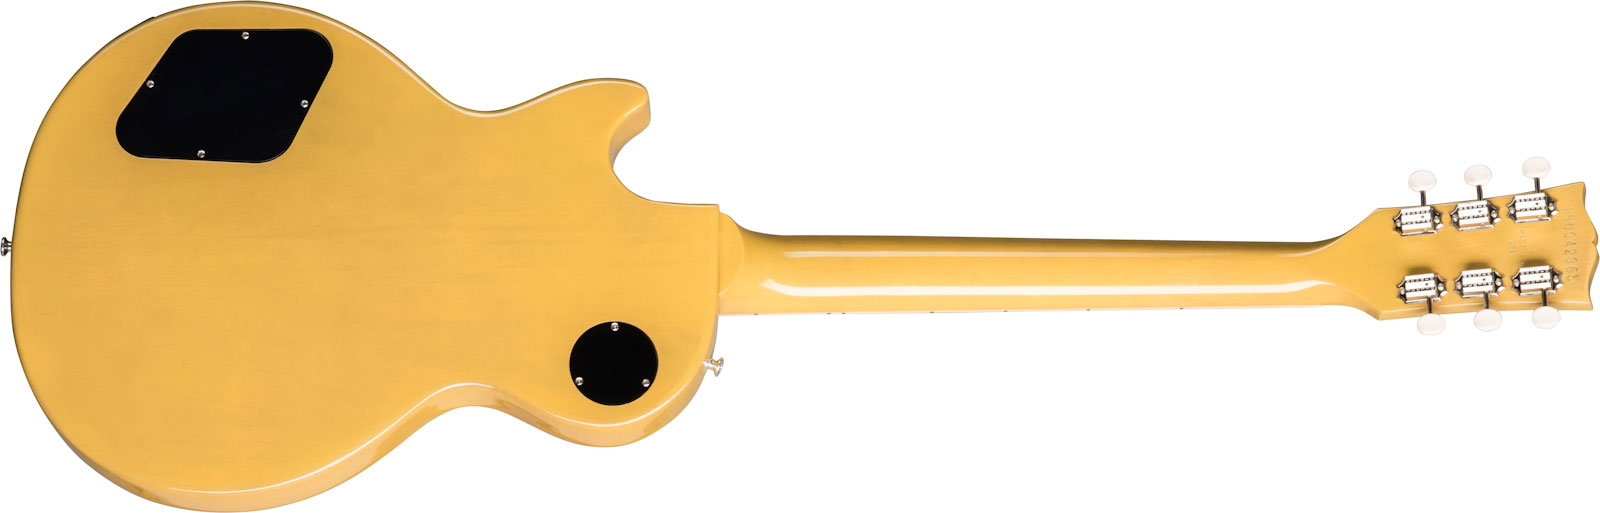 Gibson Les Paul Special Original 2p90 Ht Rw - Tv Yellow - Single cut electric guitar - Variation 1